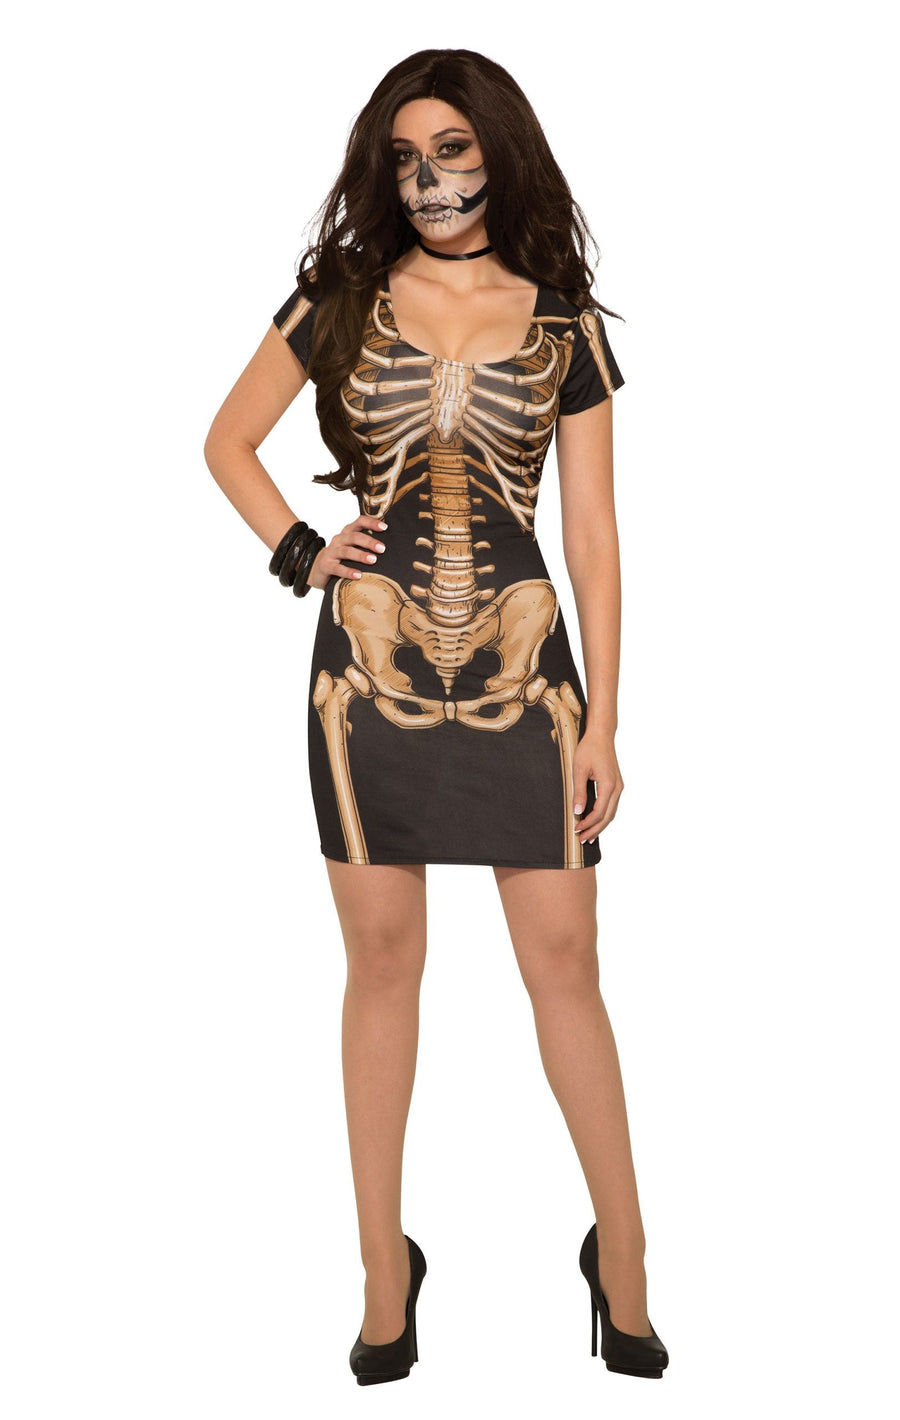 Bone Dress Ladies Skeleton Costume_1